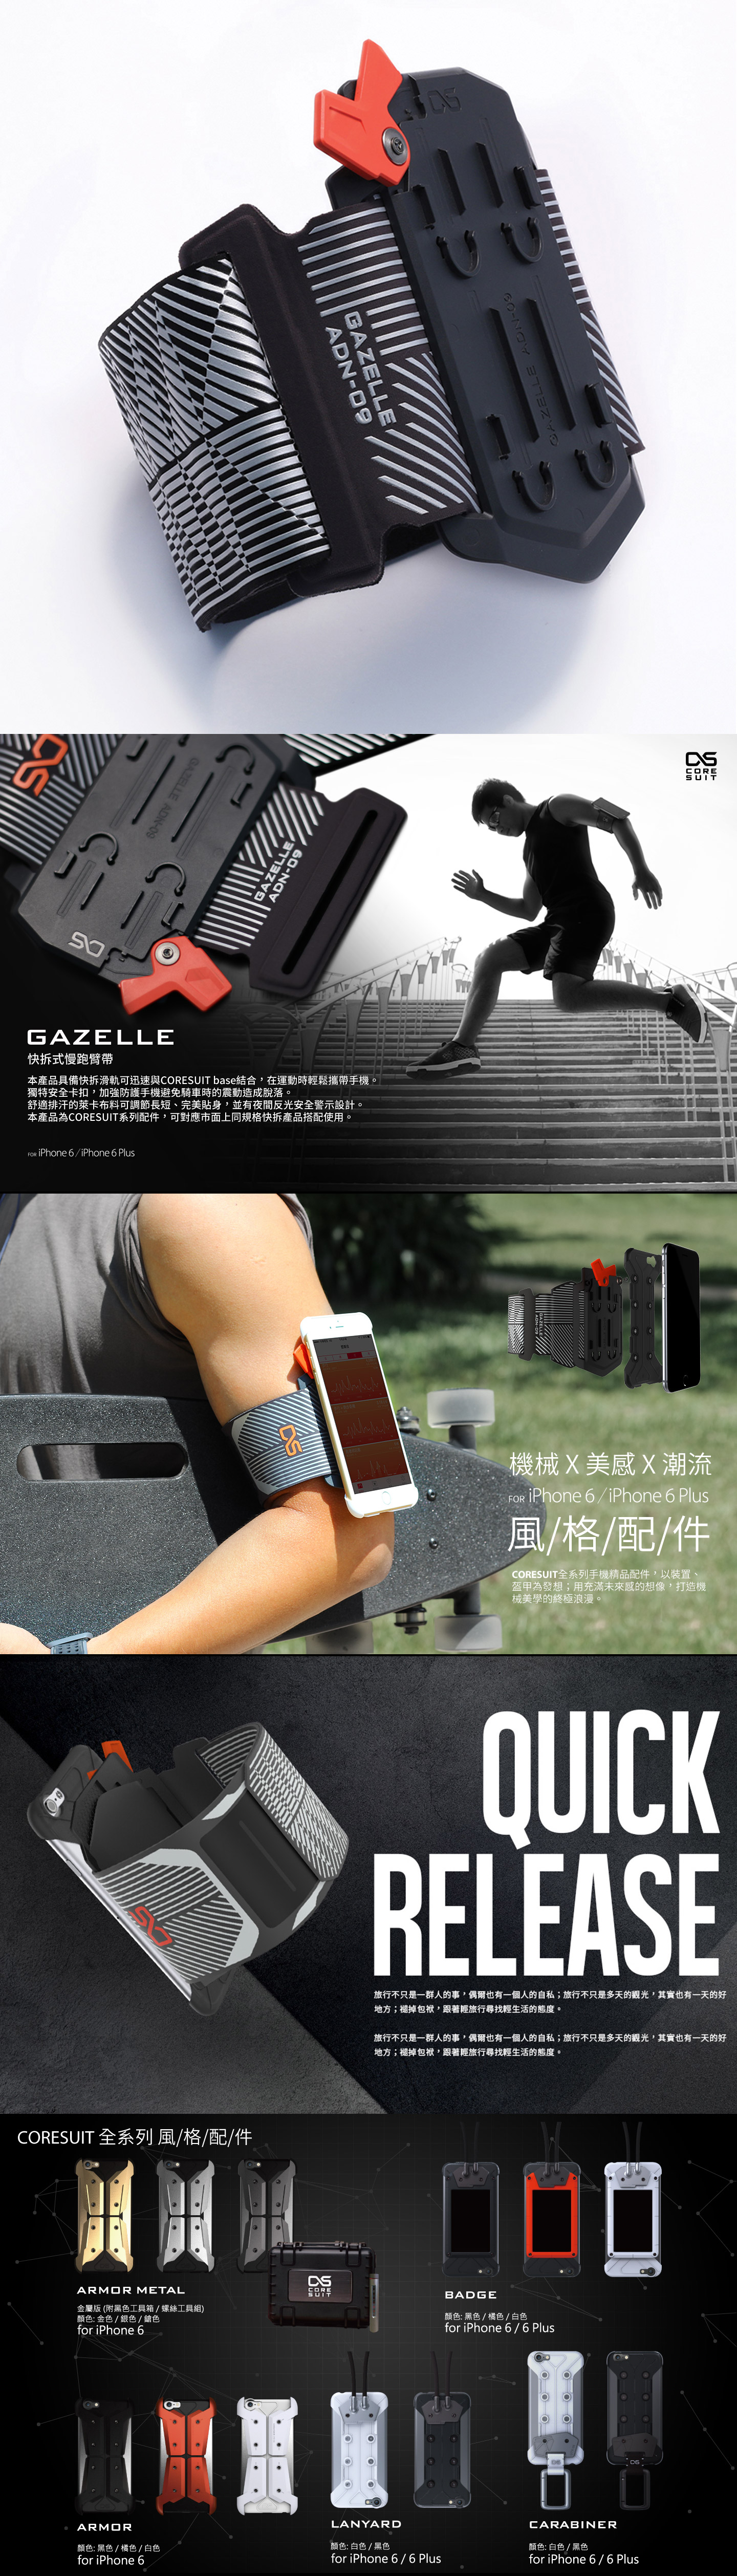 CORESUIT GAZELLE快拆式手機運動臂帶 (不含Base) iPhone 6/6 Plus